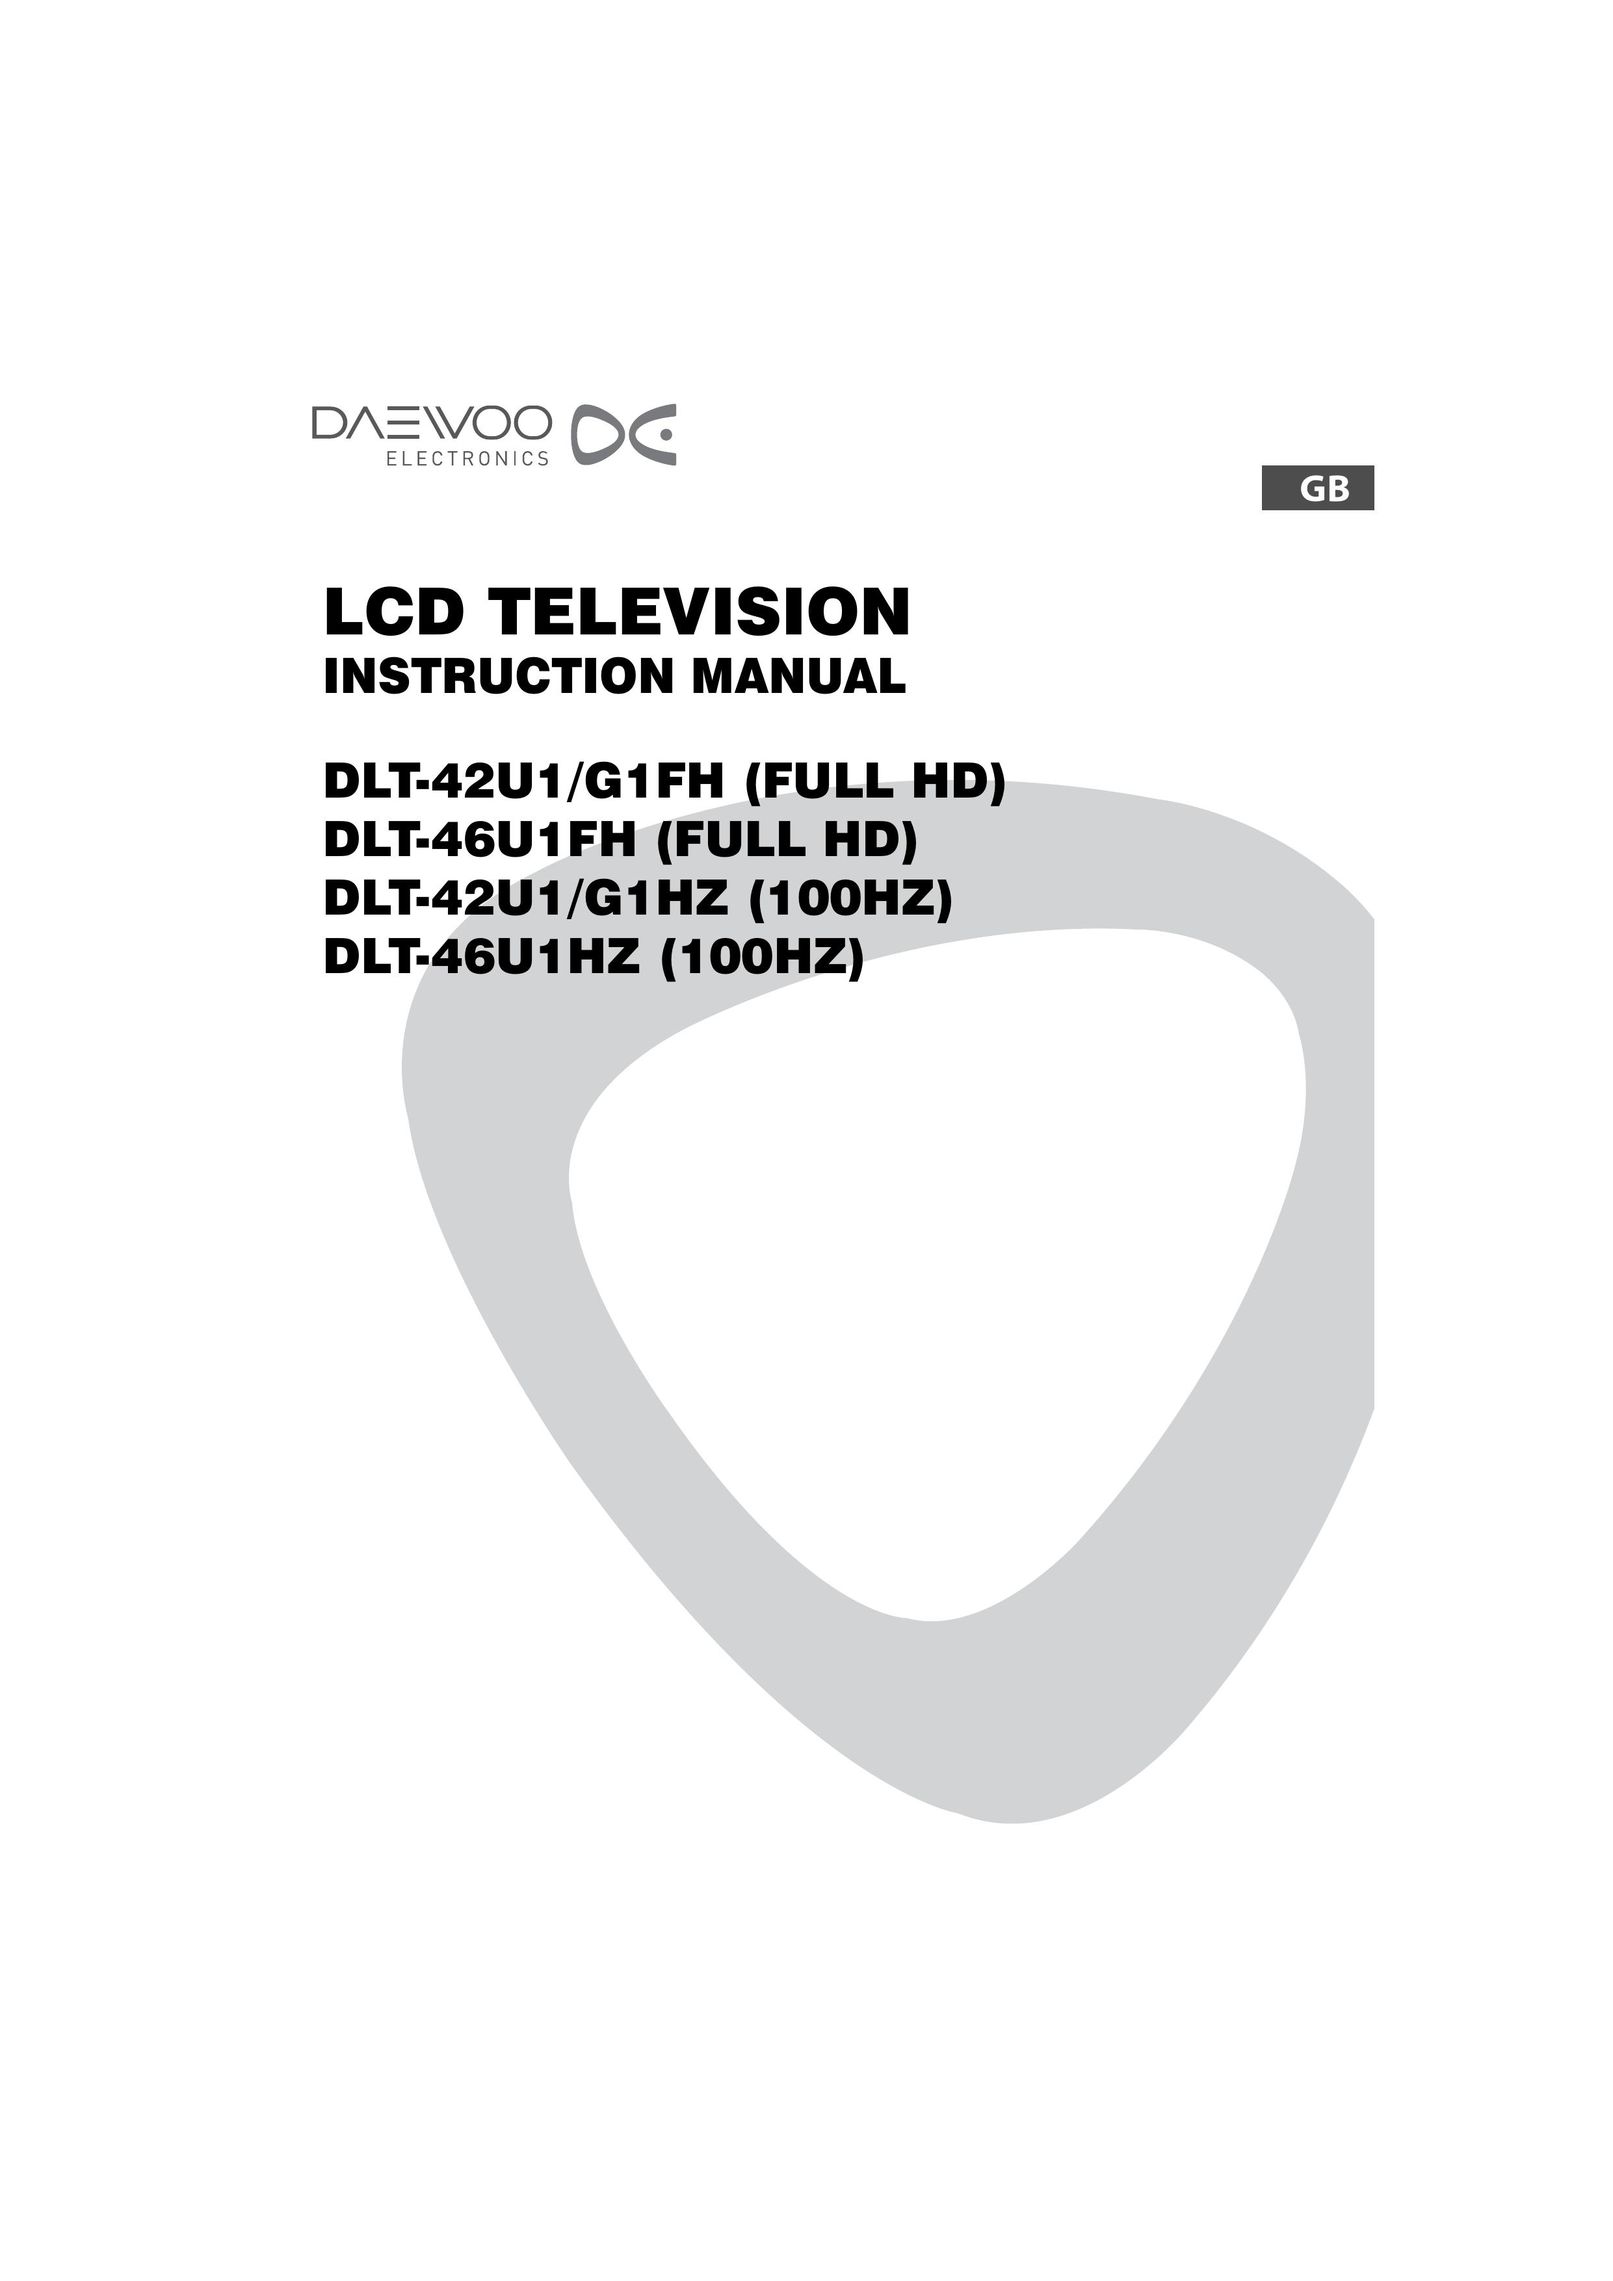 Daewoo DLT-46U1HZ Flat Panel Television User Manual